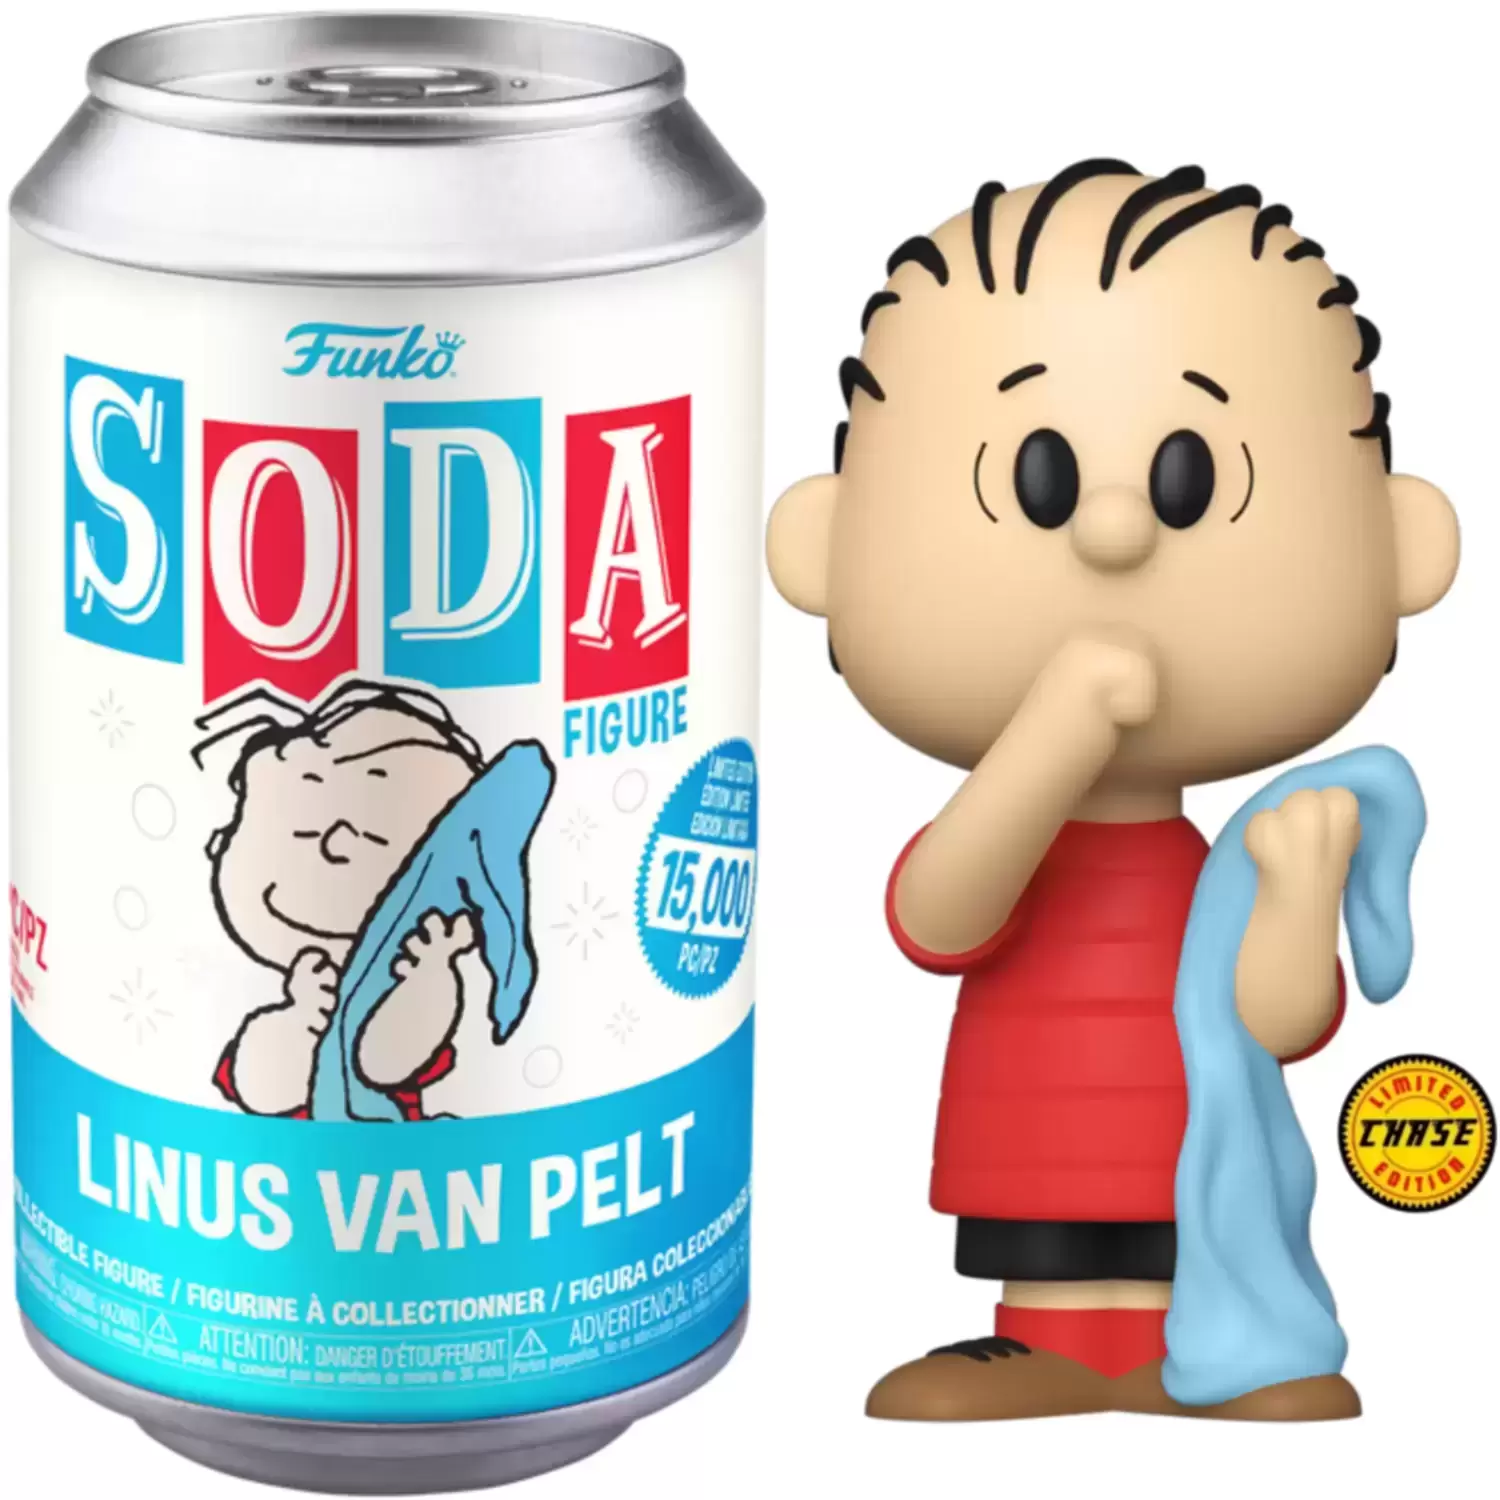 Vinyl Soda! - Peanuts - Linus Van Pelt Chase